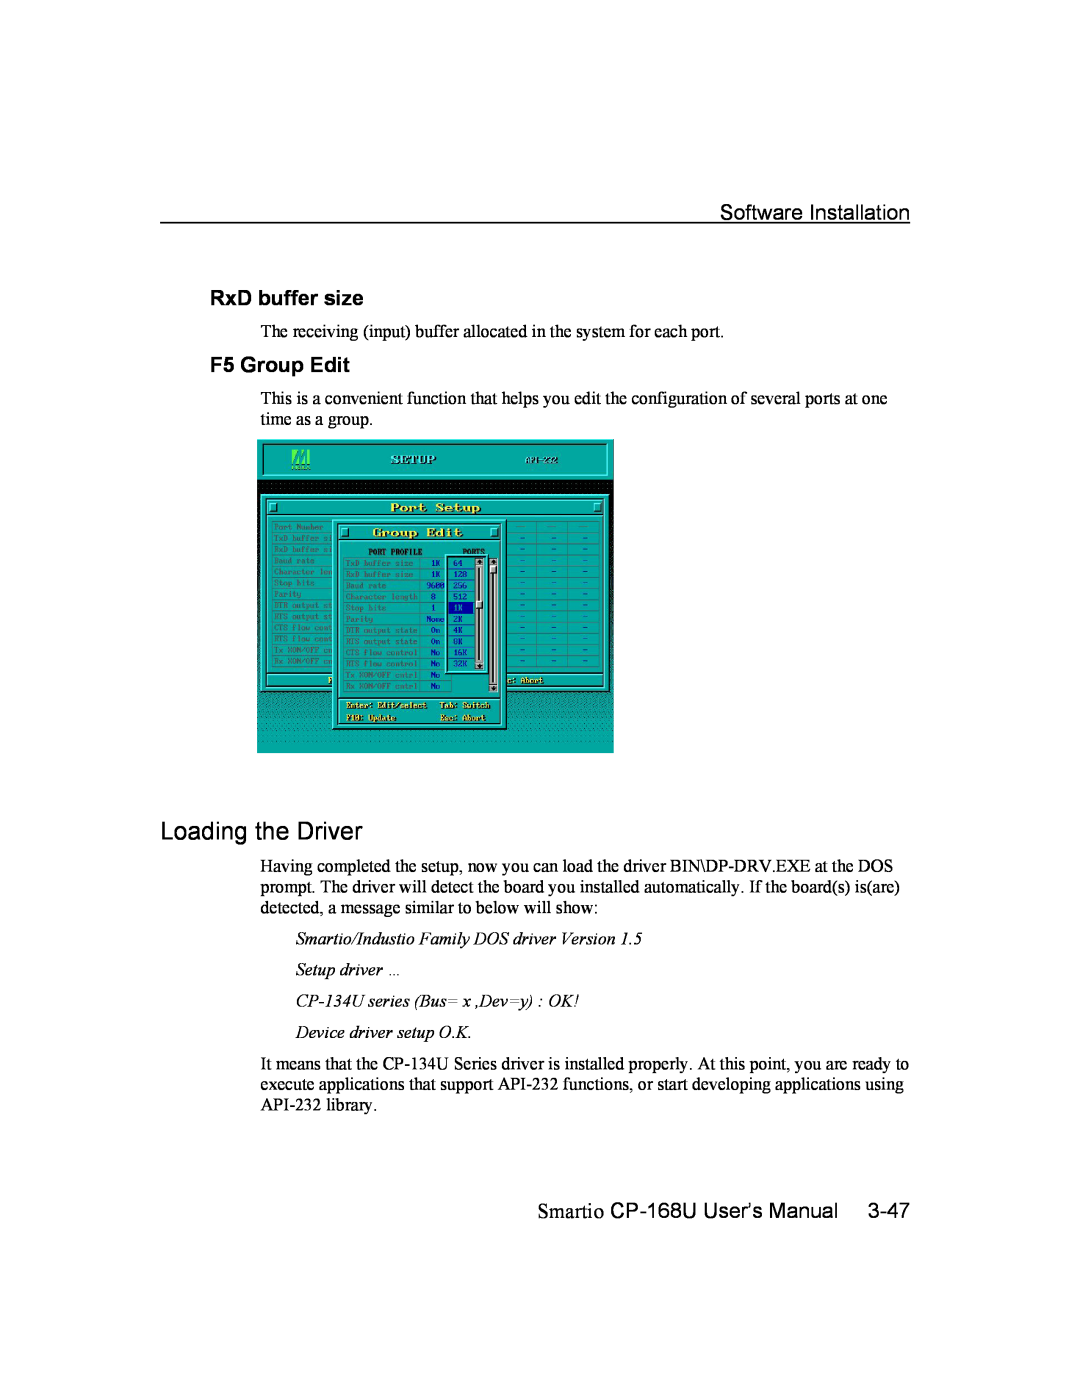 Moxa Technologies user manual Loading the Driver, Software Installation, Smartio CP-168U User’s Manual 